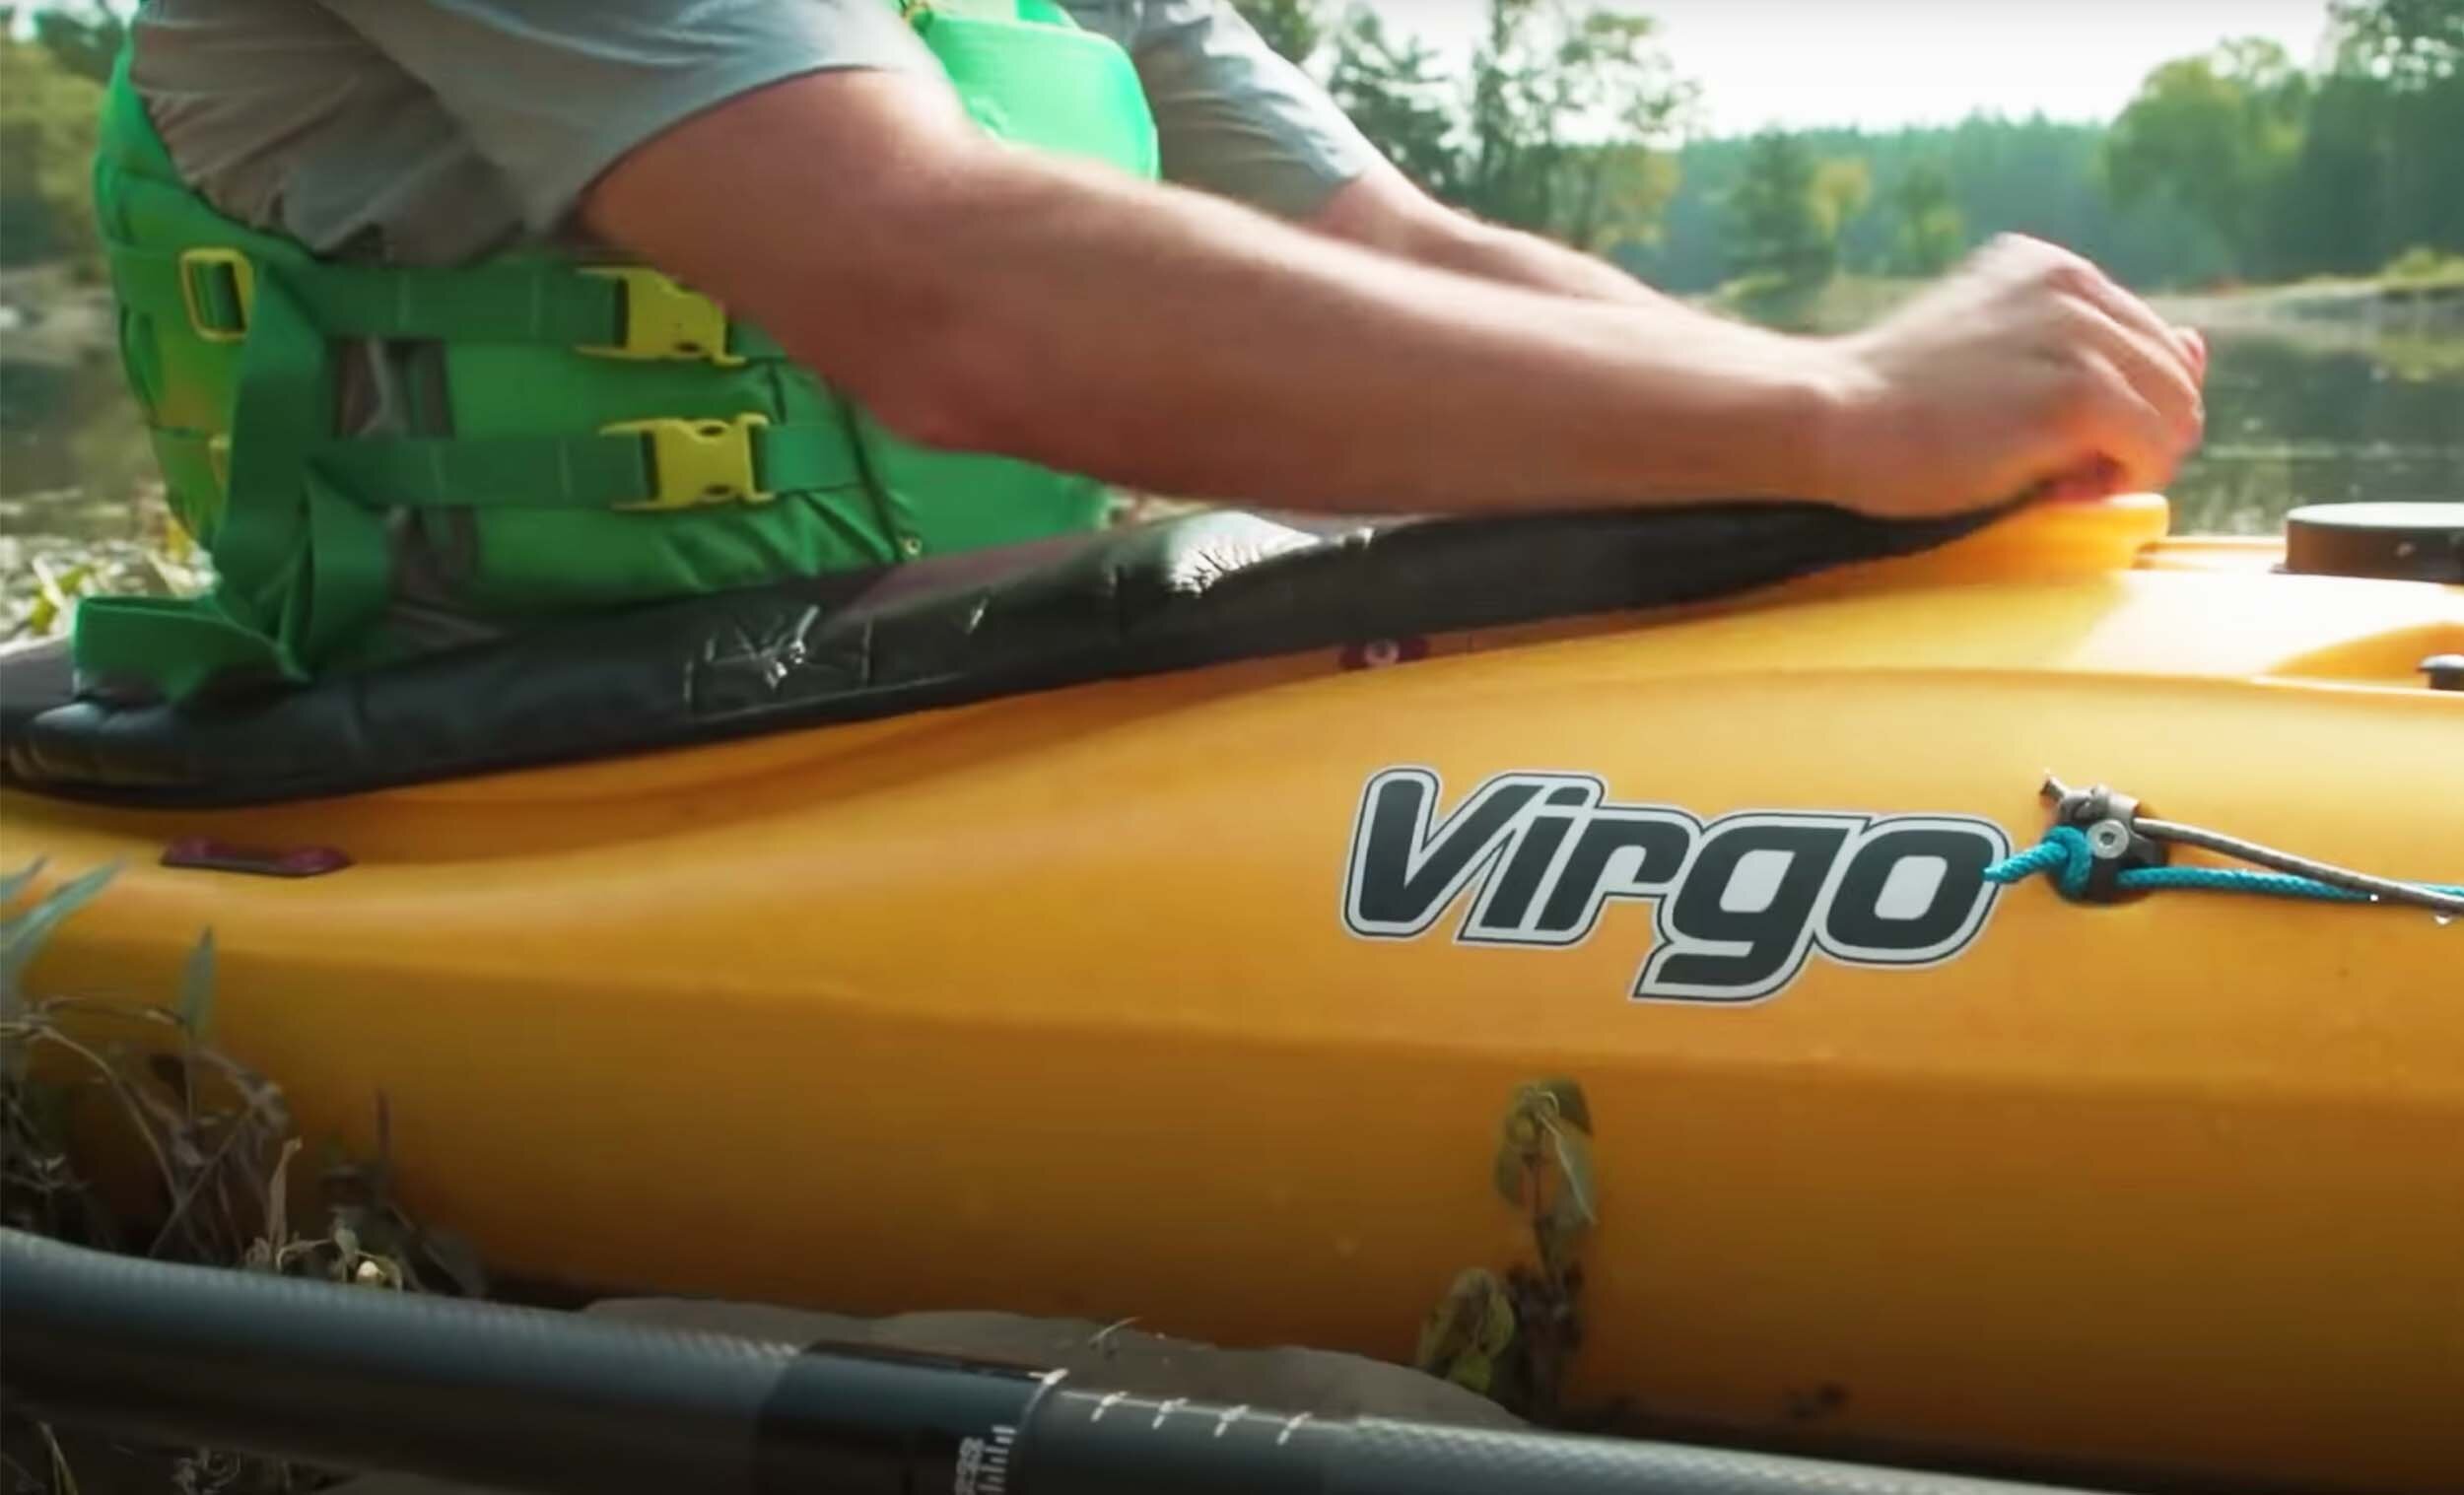 close up of the pandh virgo logo on a white kayak ken whiting paddletv and the kokatat pfd life jacket